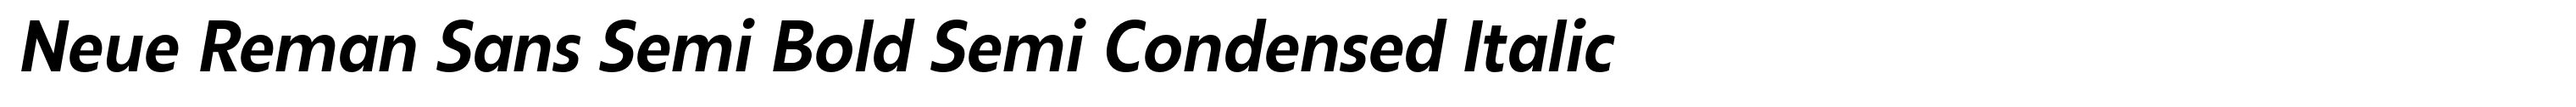 Neue Reman Sans Semi Bold Semi Condensed Italic